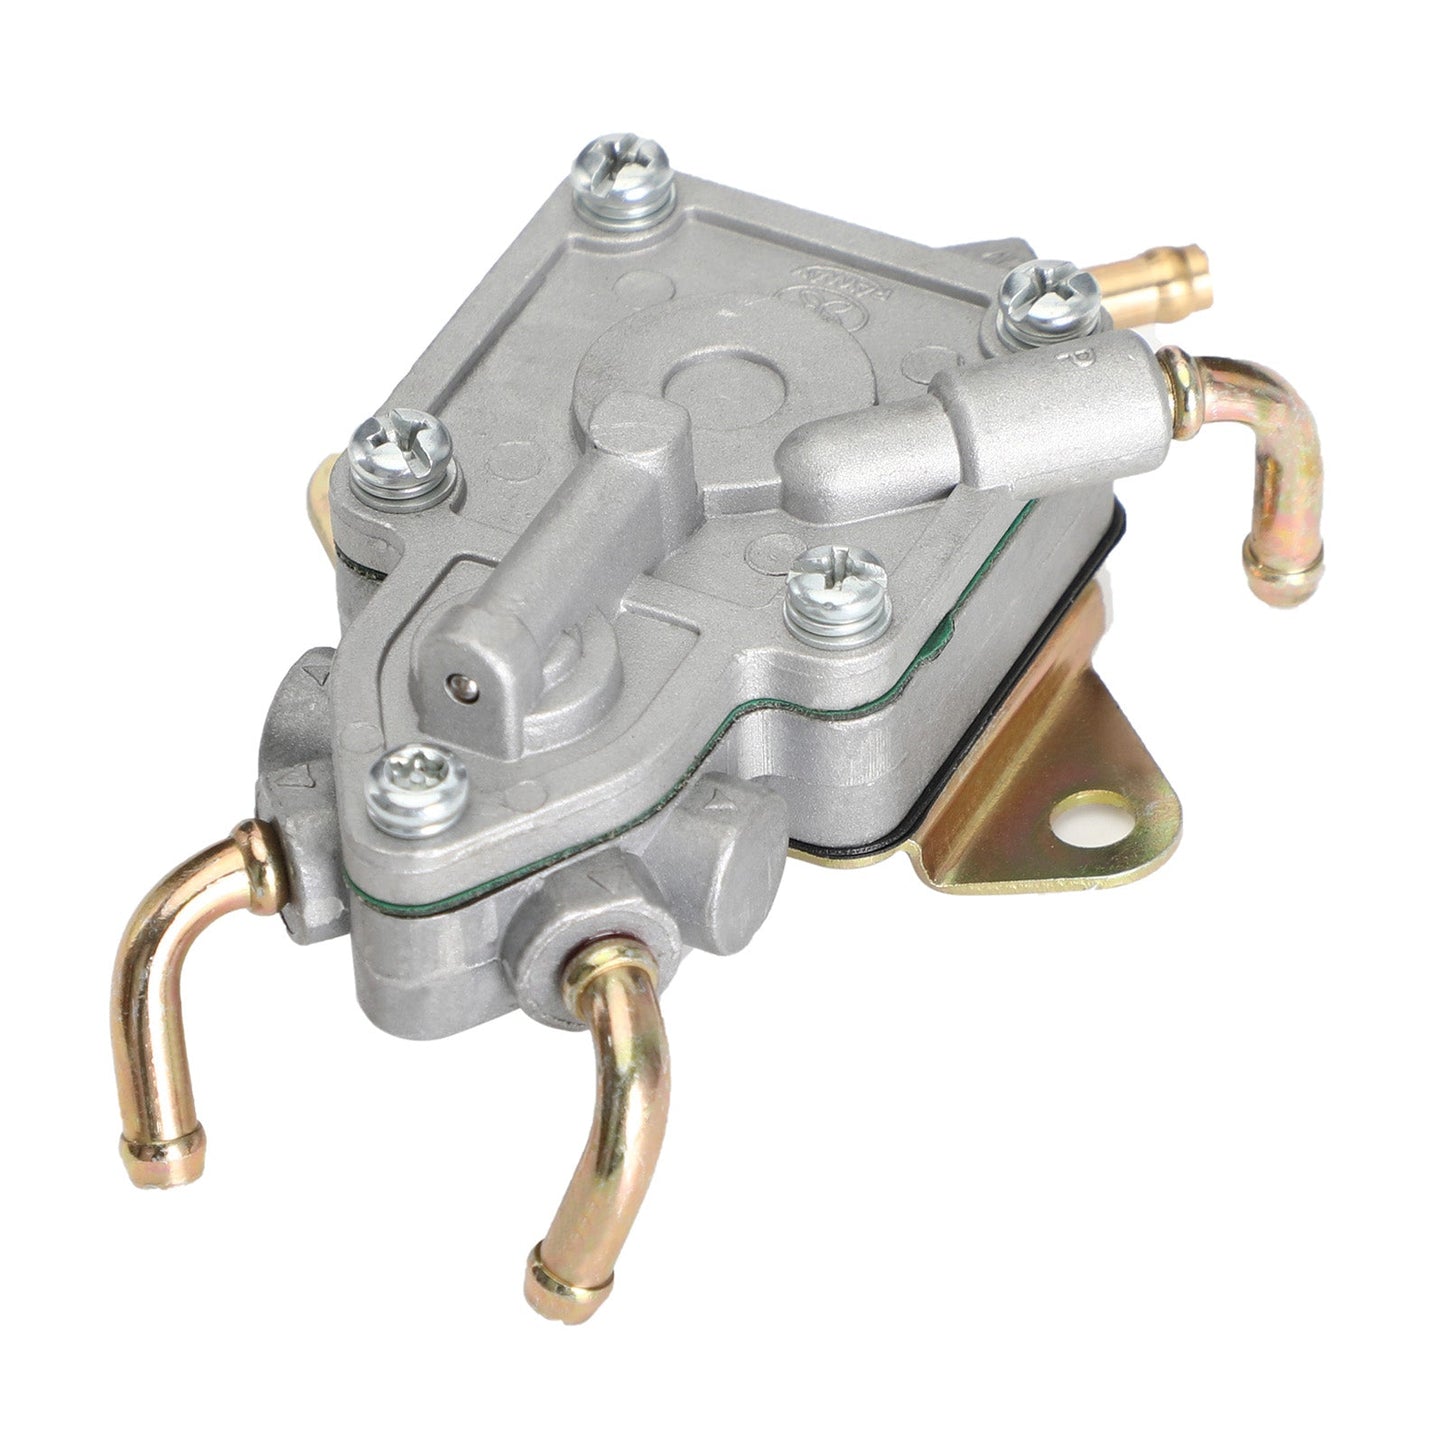 Fuel Pump Assy For Arctic Cat ZR 440 Sno Pro 440 2002-2006 Replaces 1670-269